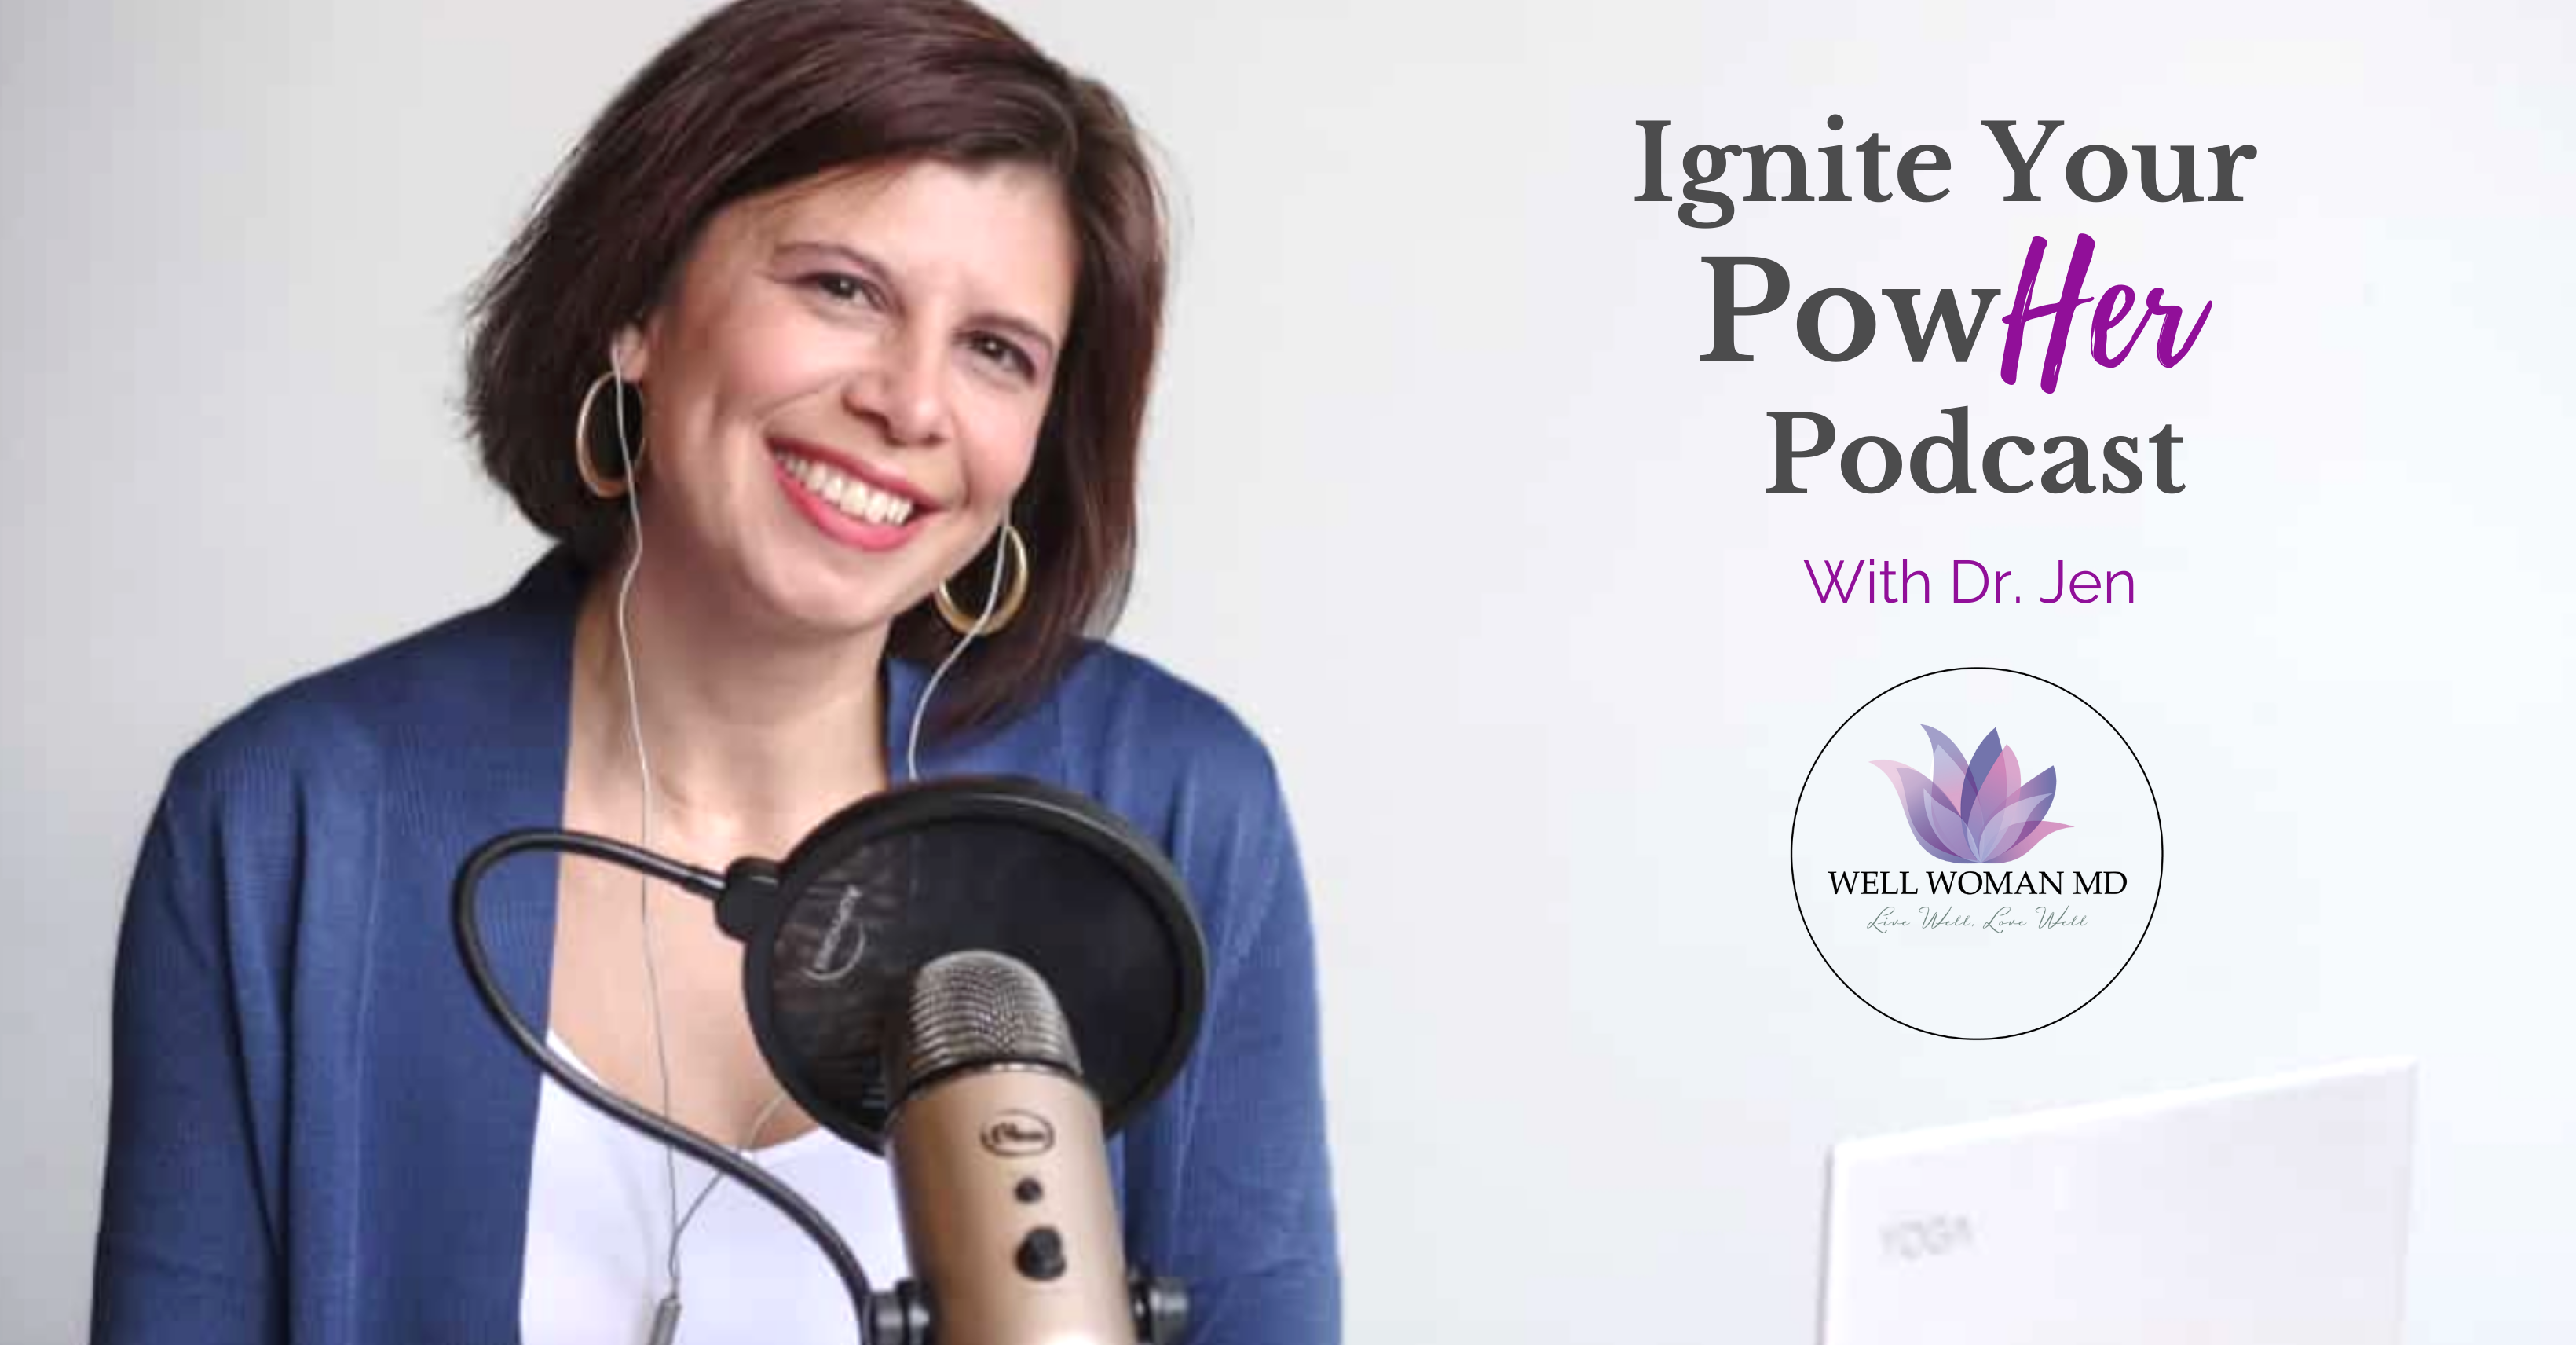 copy of ignite your powher podcast